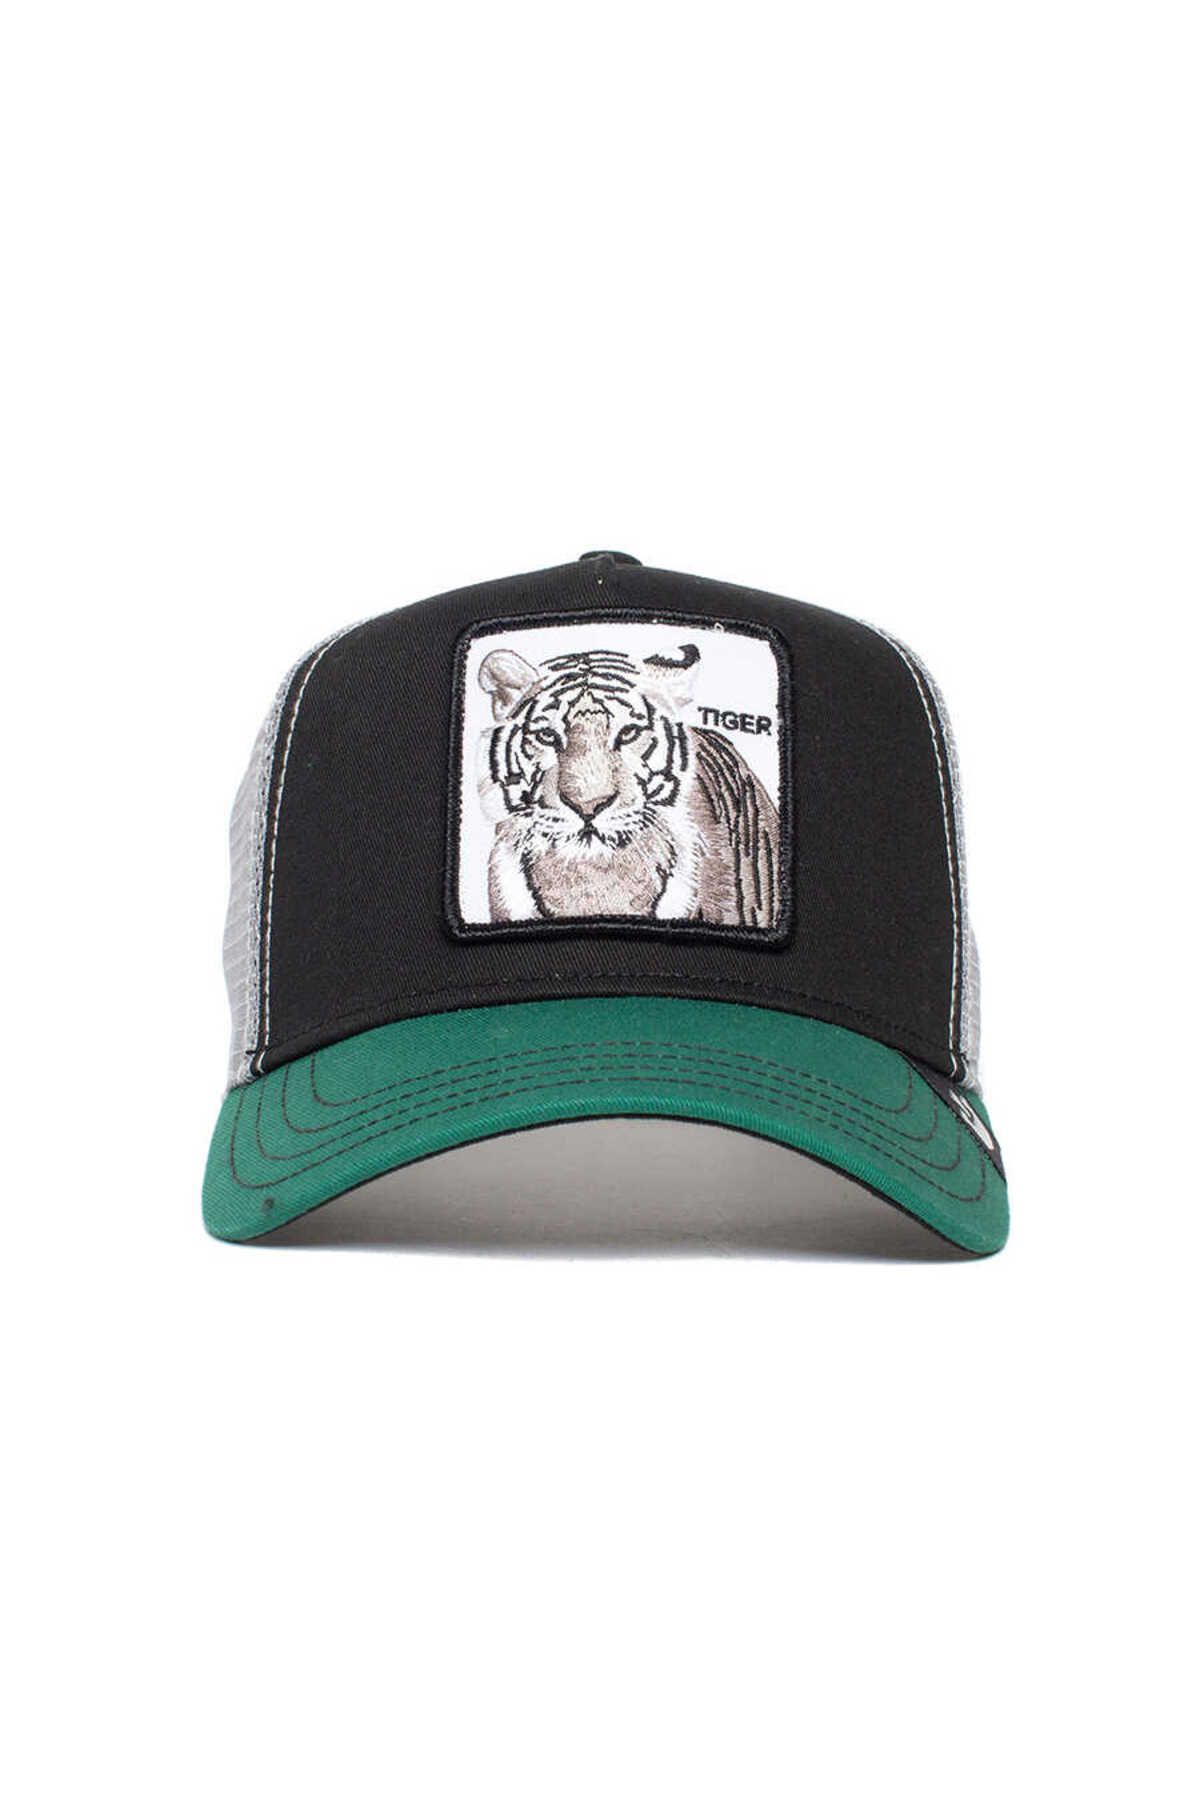 Goorin Bros . The White Tiger (kaplan Figürlü ) Şapka 101-0392 Yeşil Standart